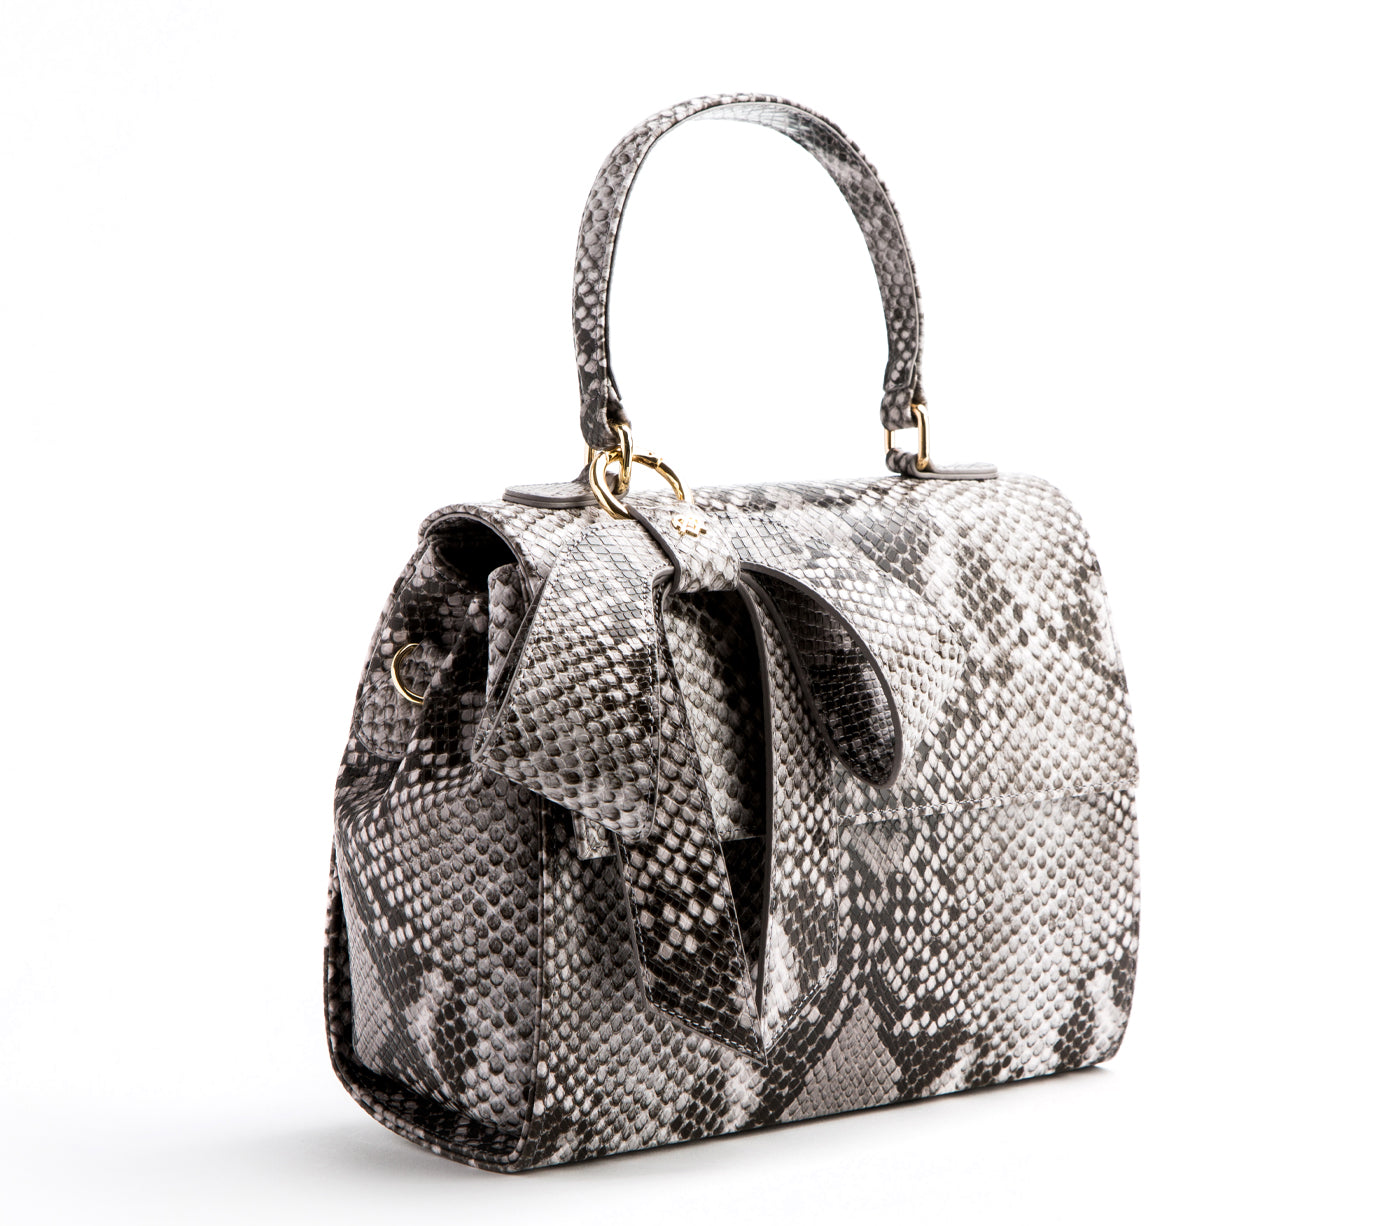 Cottontail - Black & White Snake Texture Vegan Leather Bag